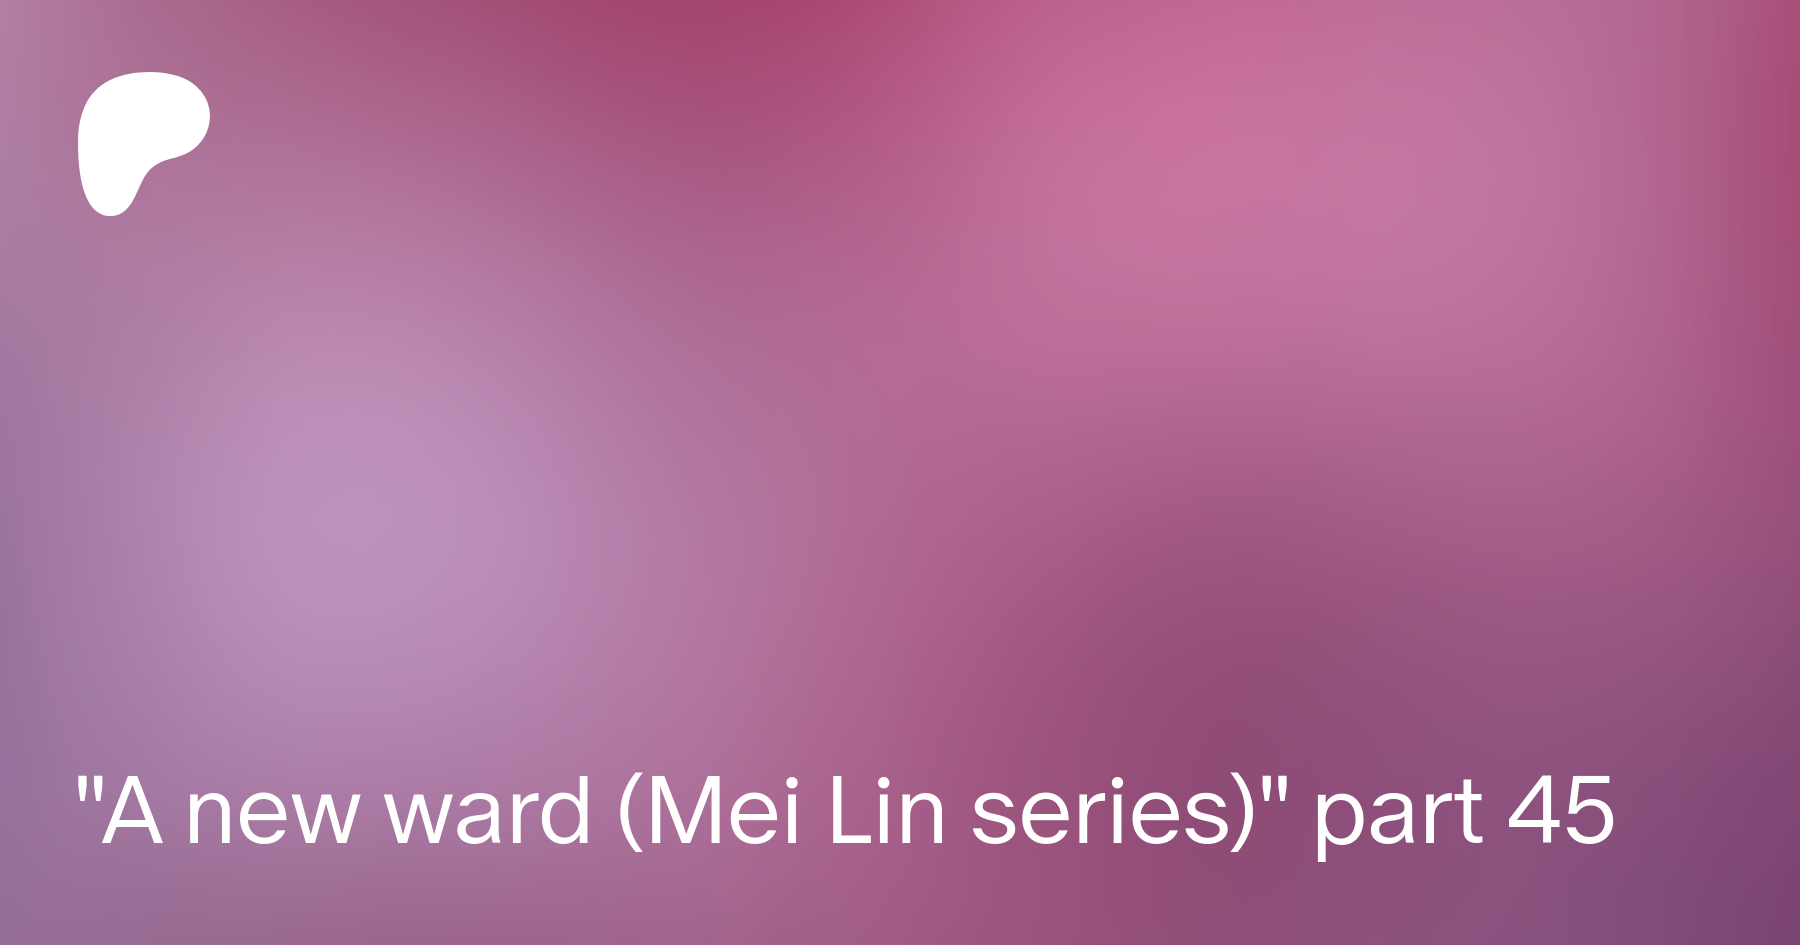 A new ward (Mei Lin series) part 45 | Patreon